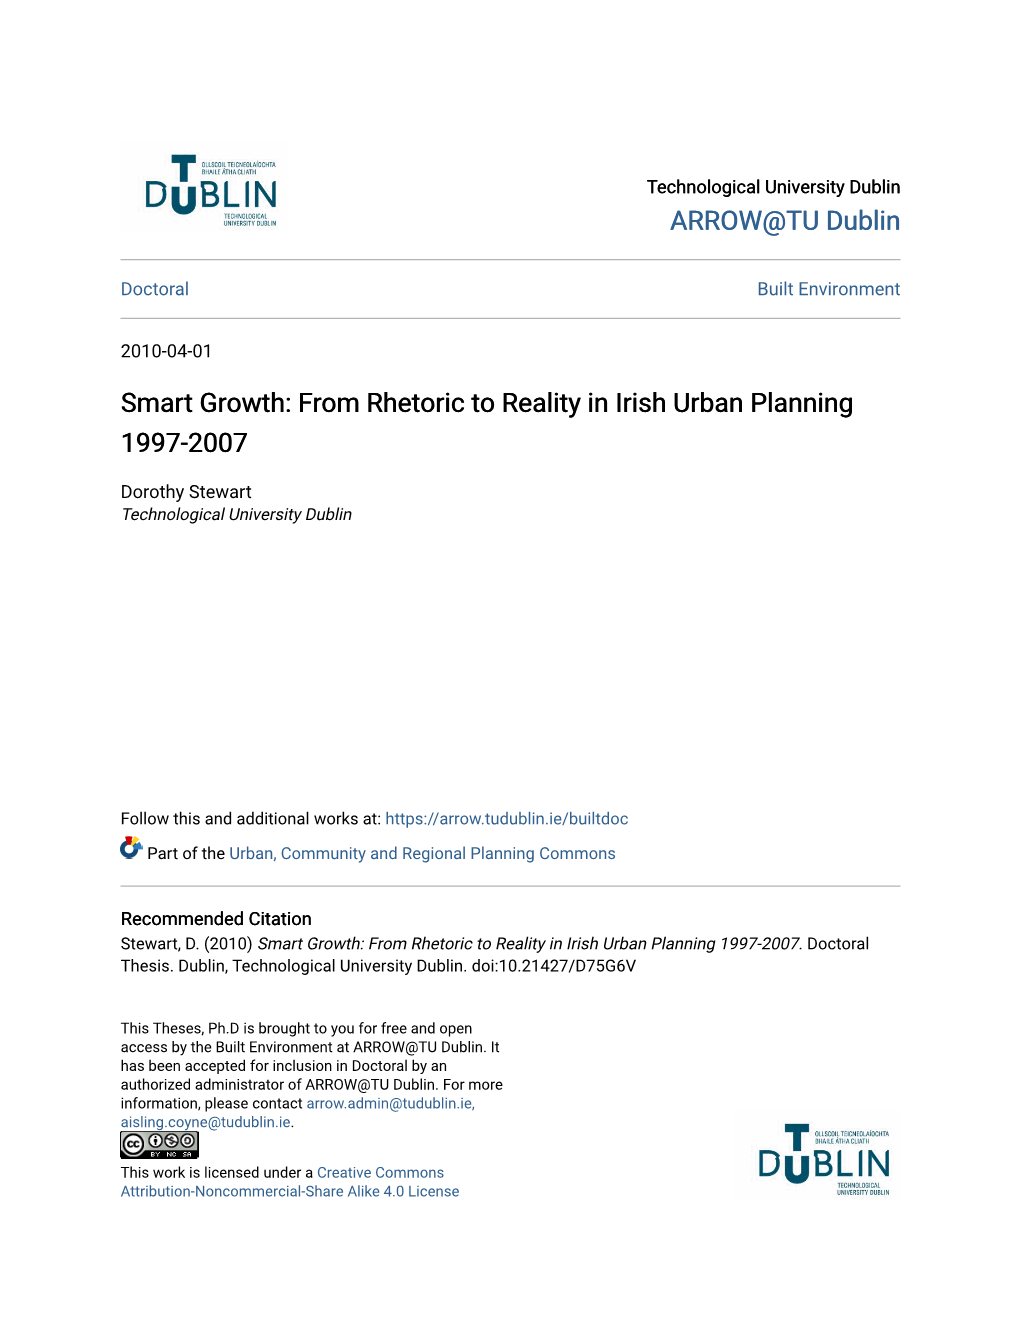 Smart Growth: from Rhetoric to Reality in Irish Urban Planning 1997-2007